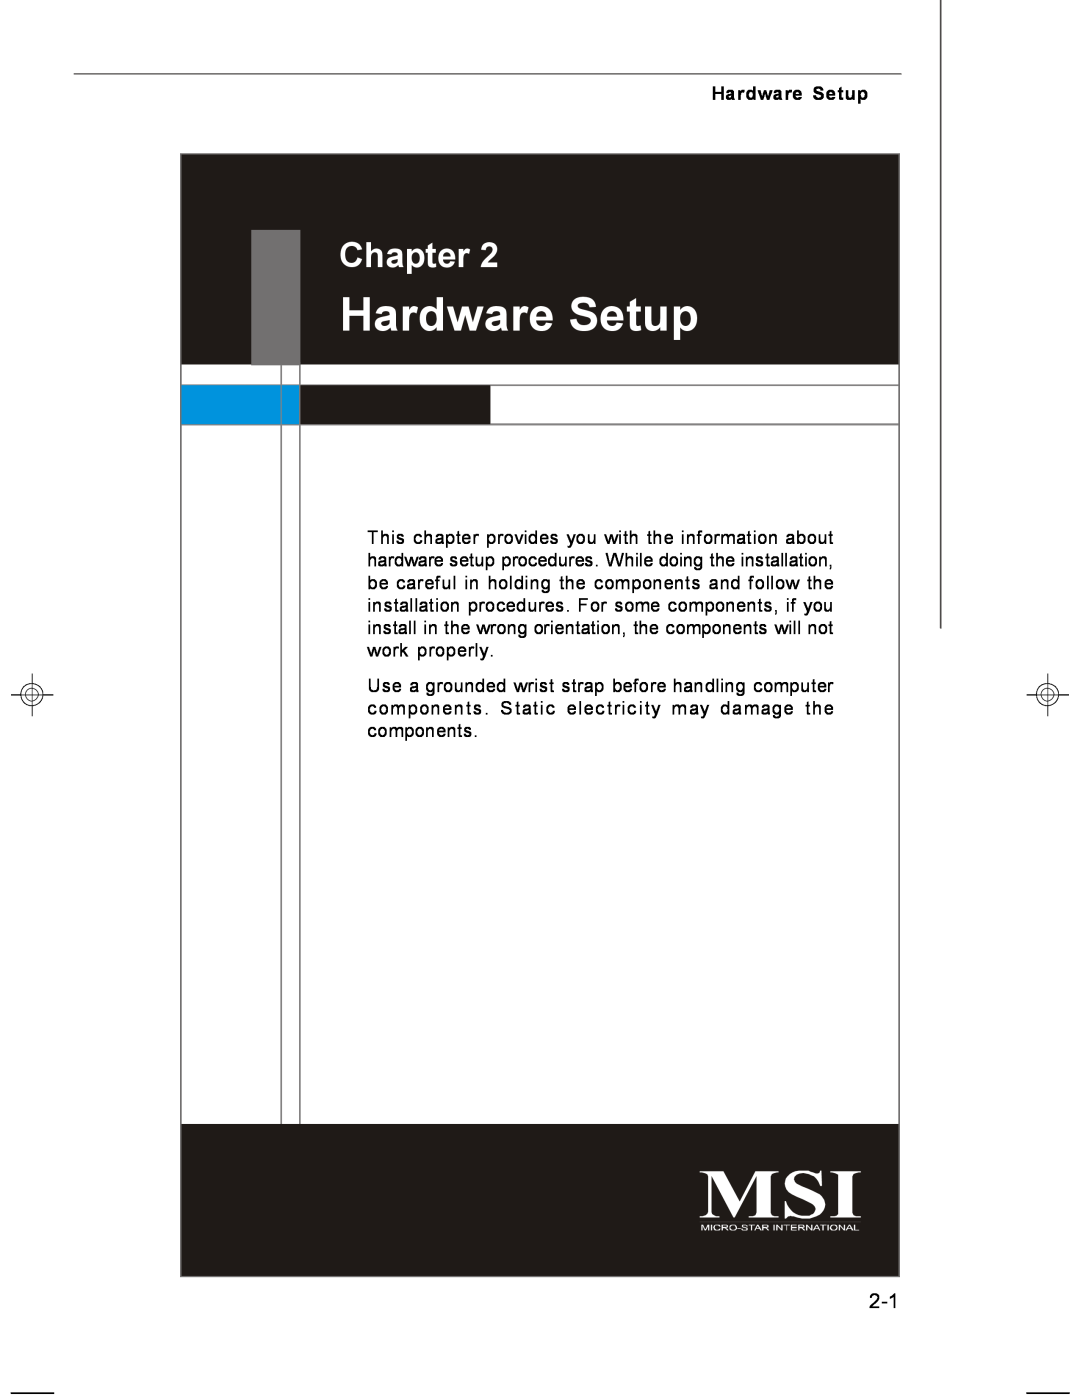 MSI MS-7255 manual Hardware Setup, Chapter 